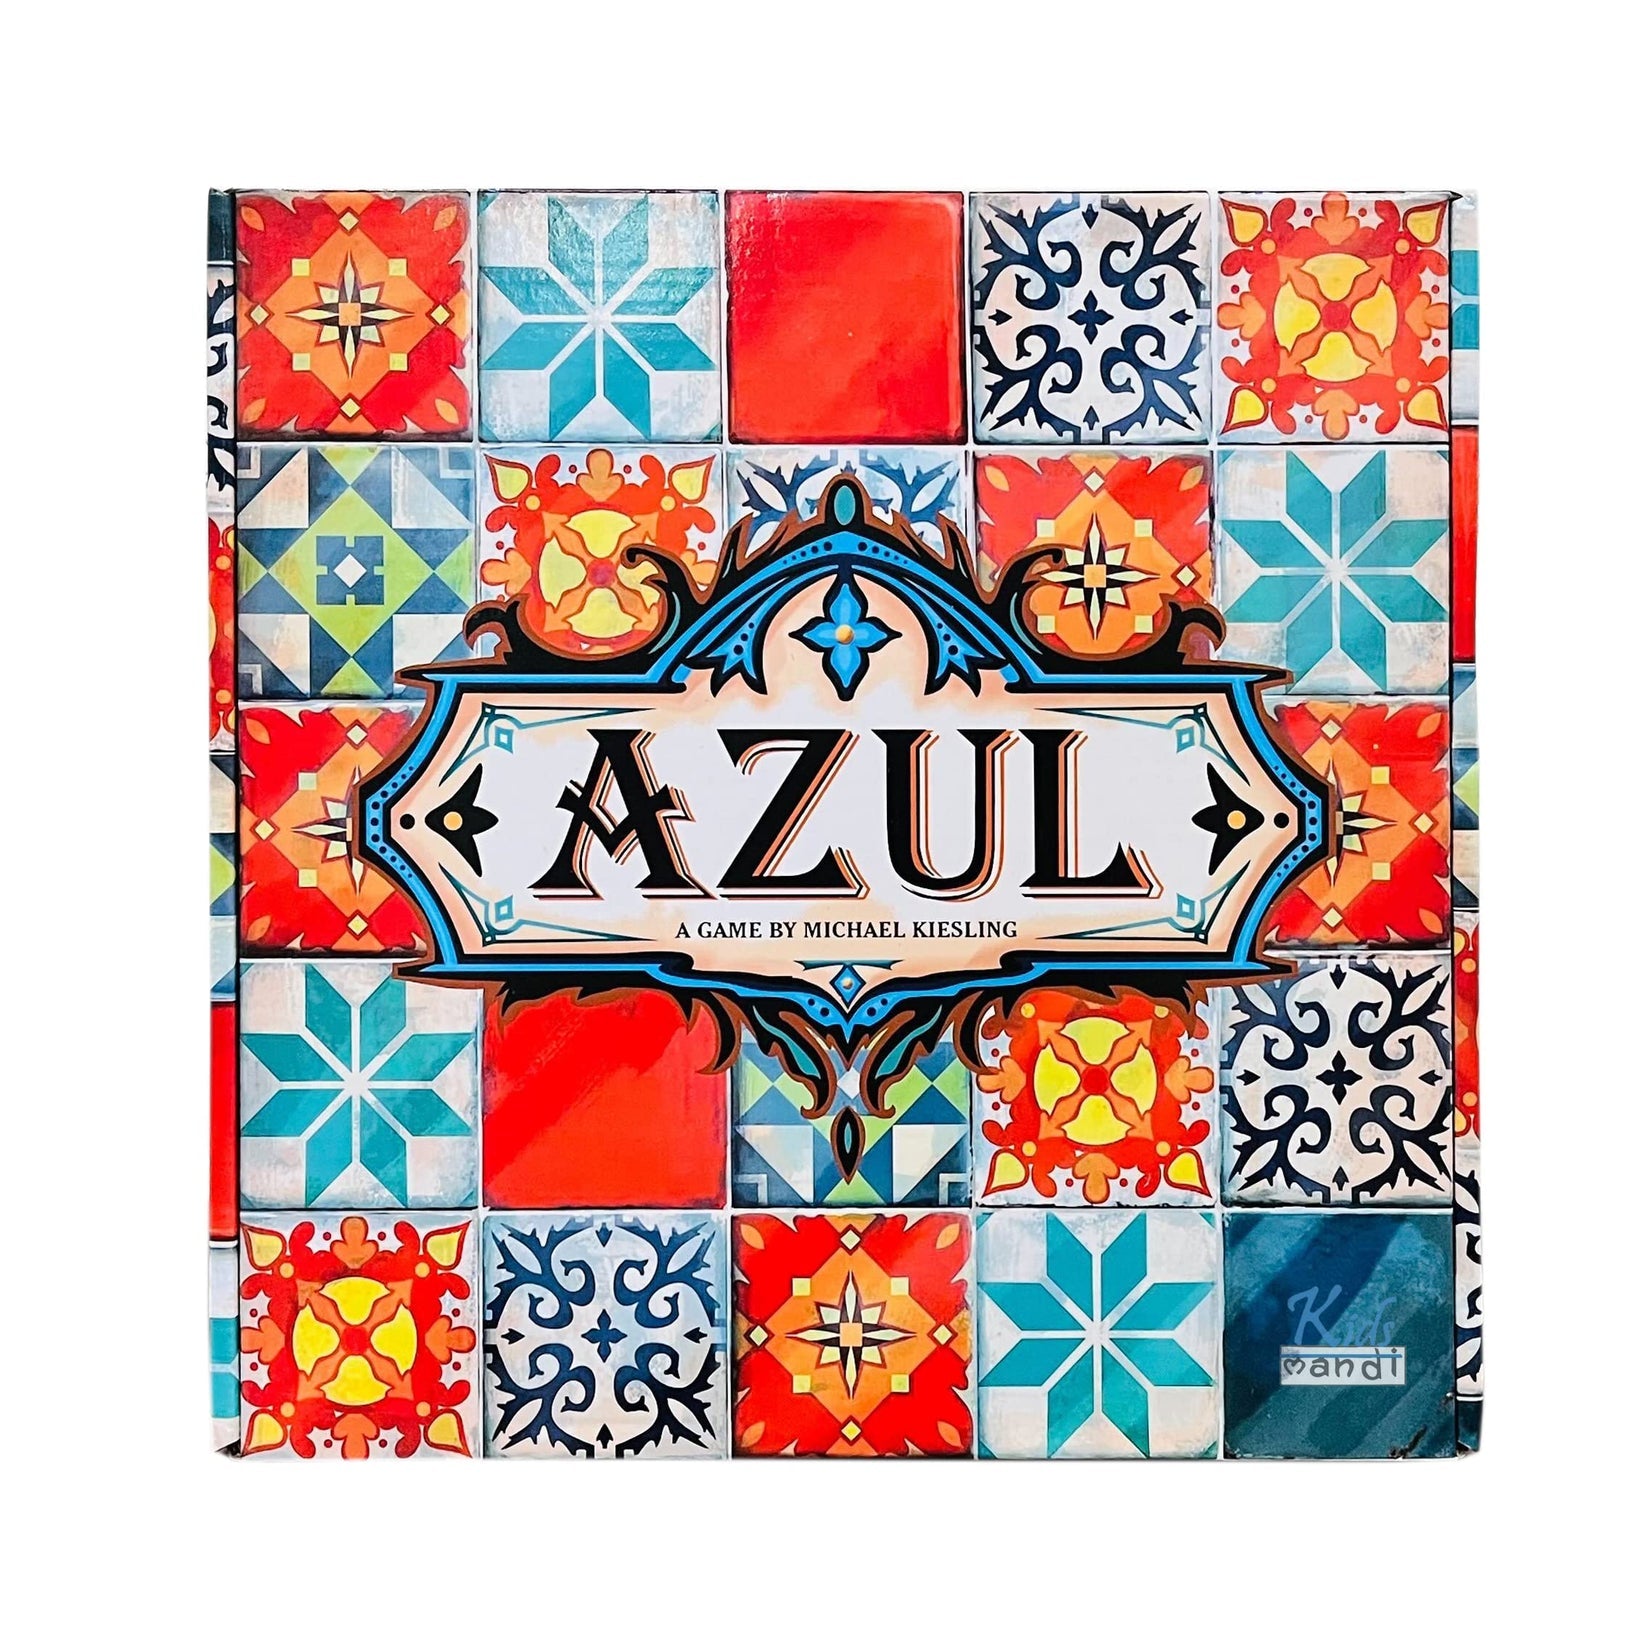 Kids Mandi Azul Strategy Tile Placement Board Game- Educational Fun